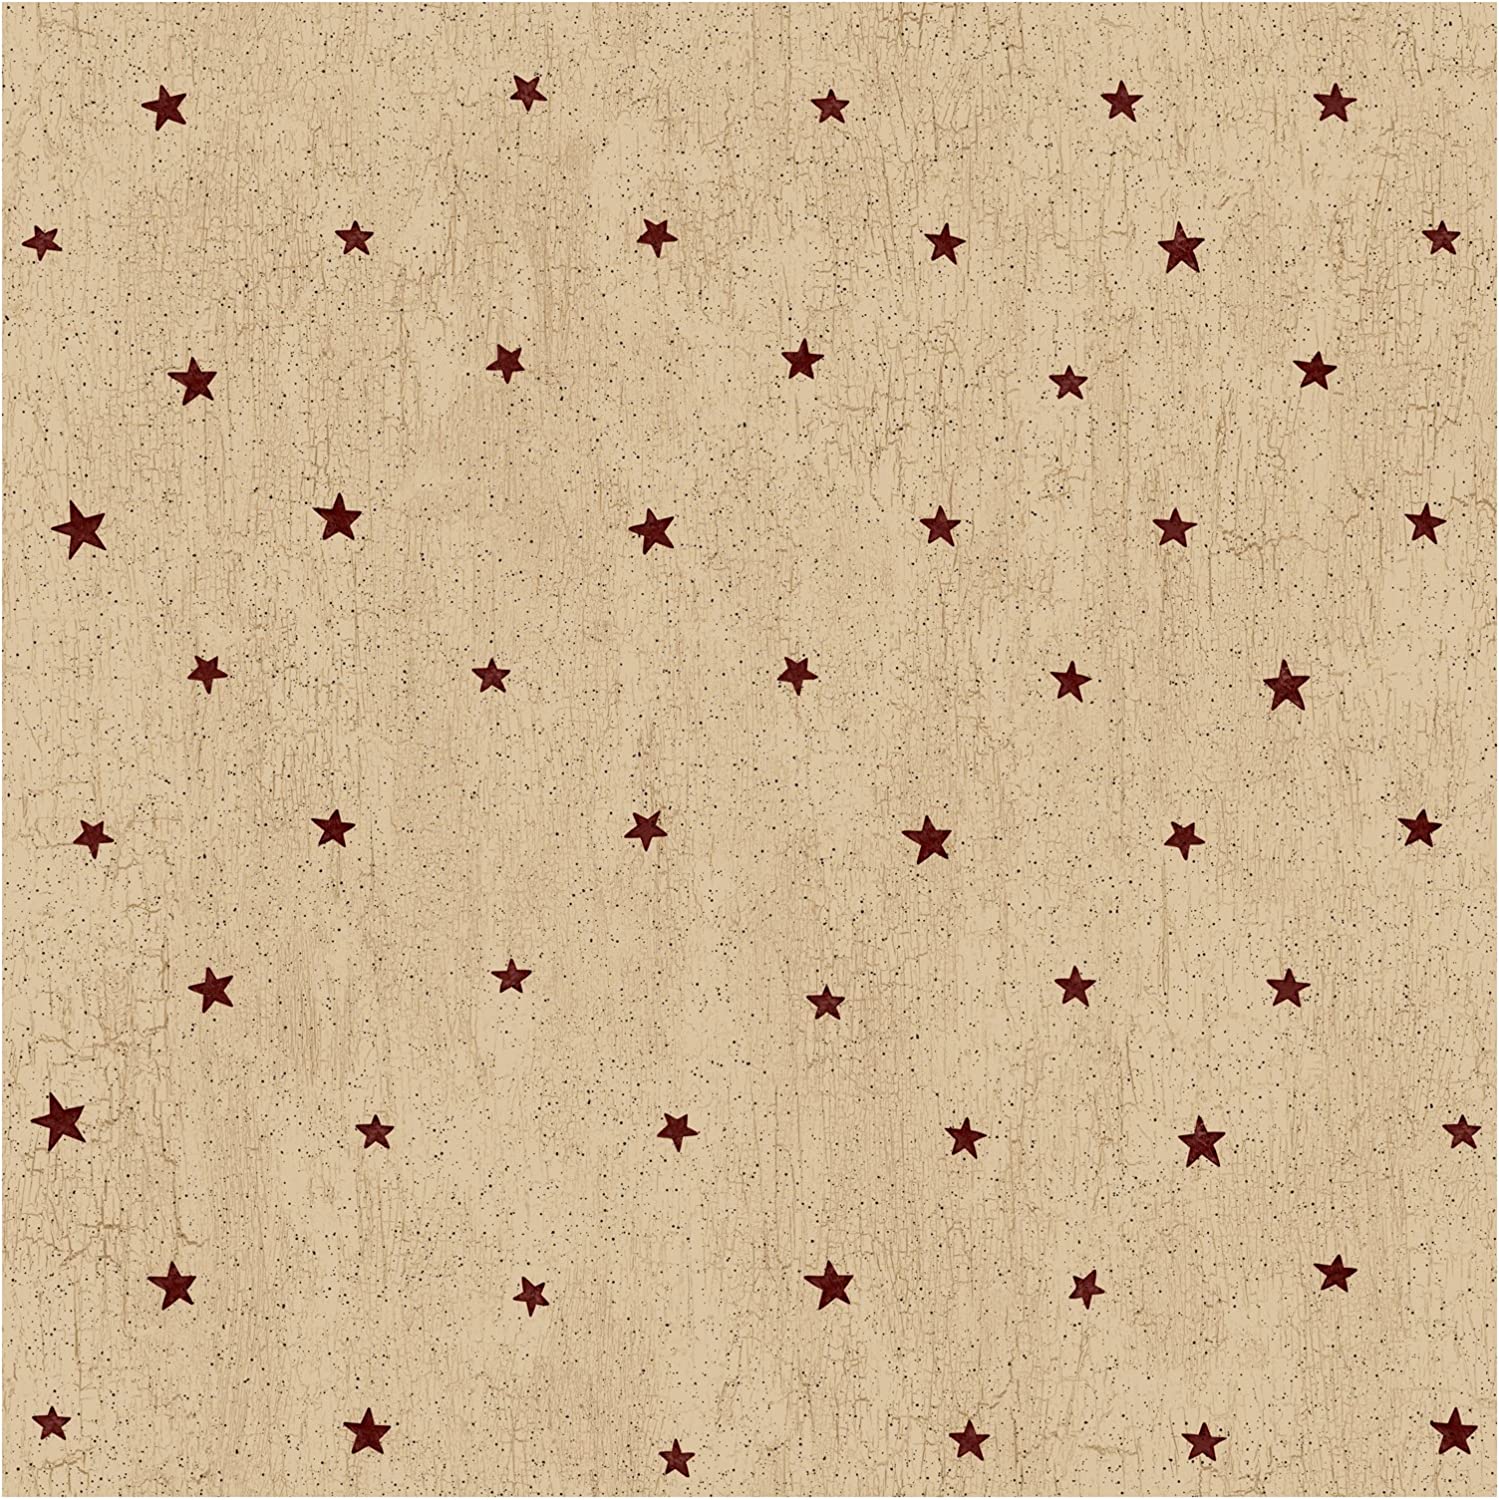 Tin Star Wallpapers